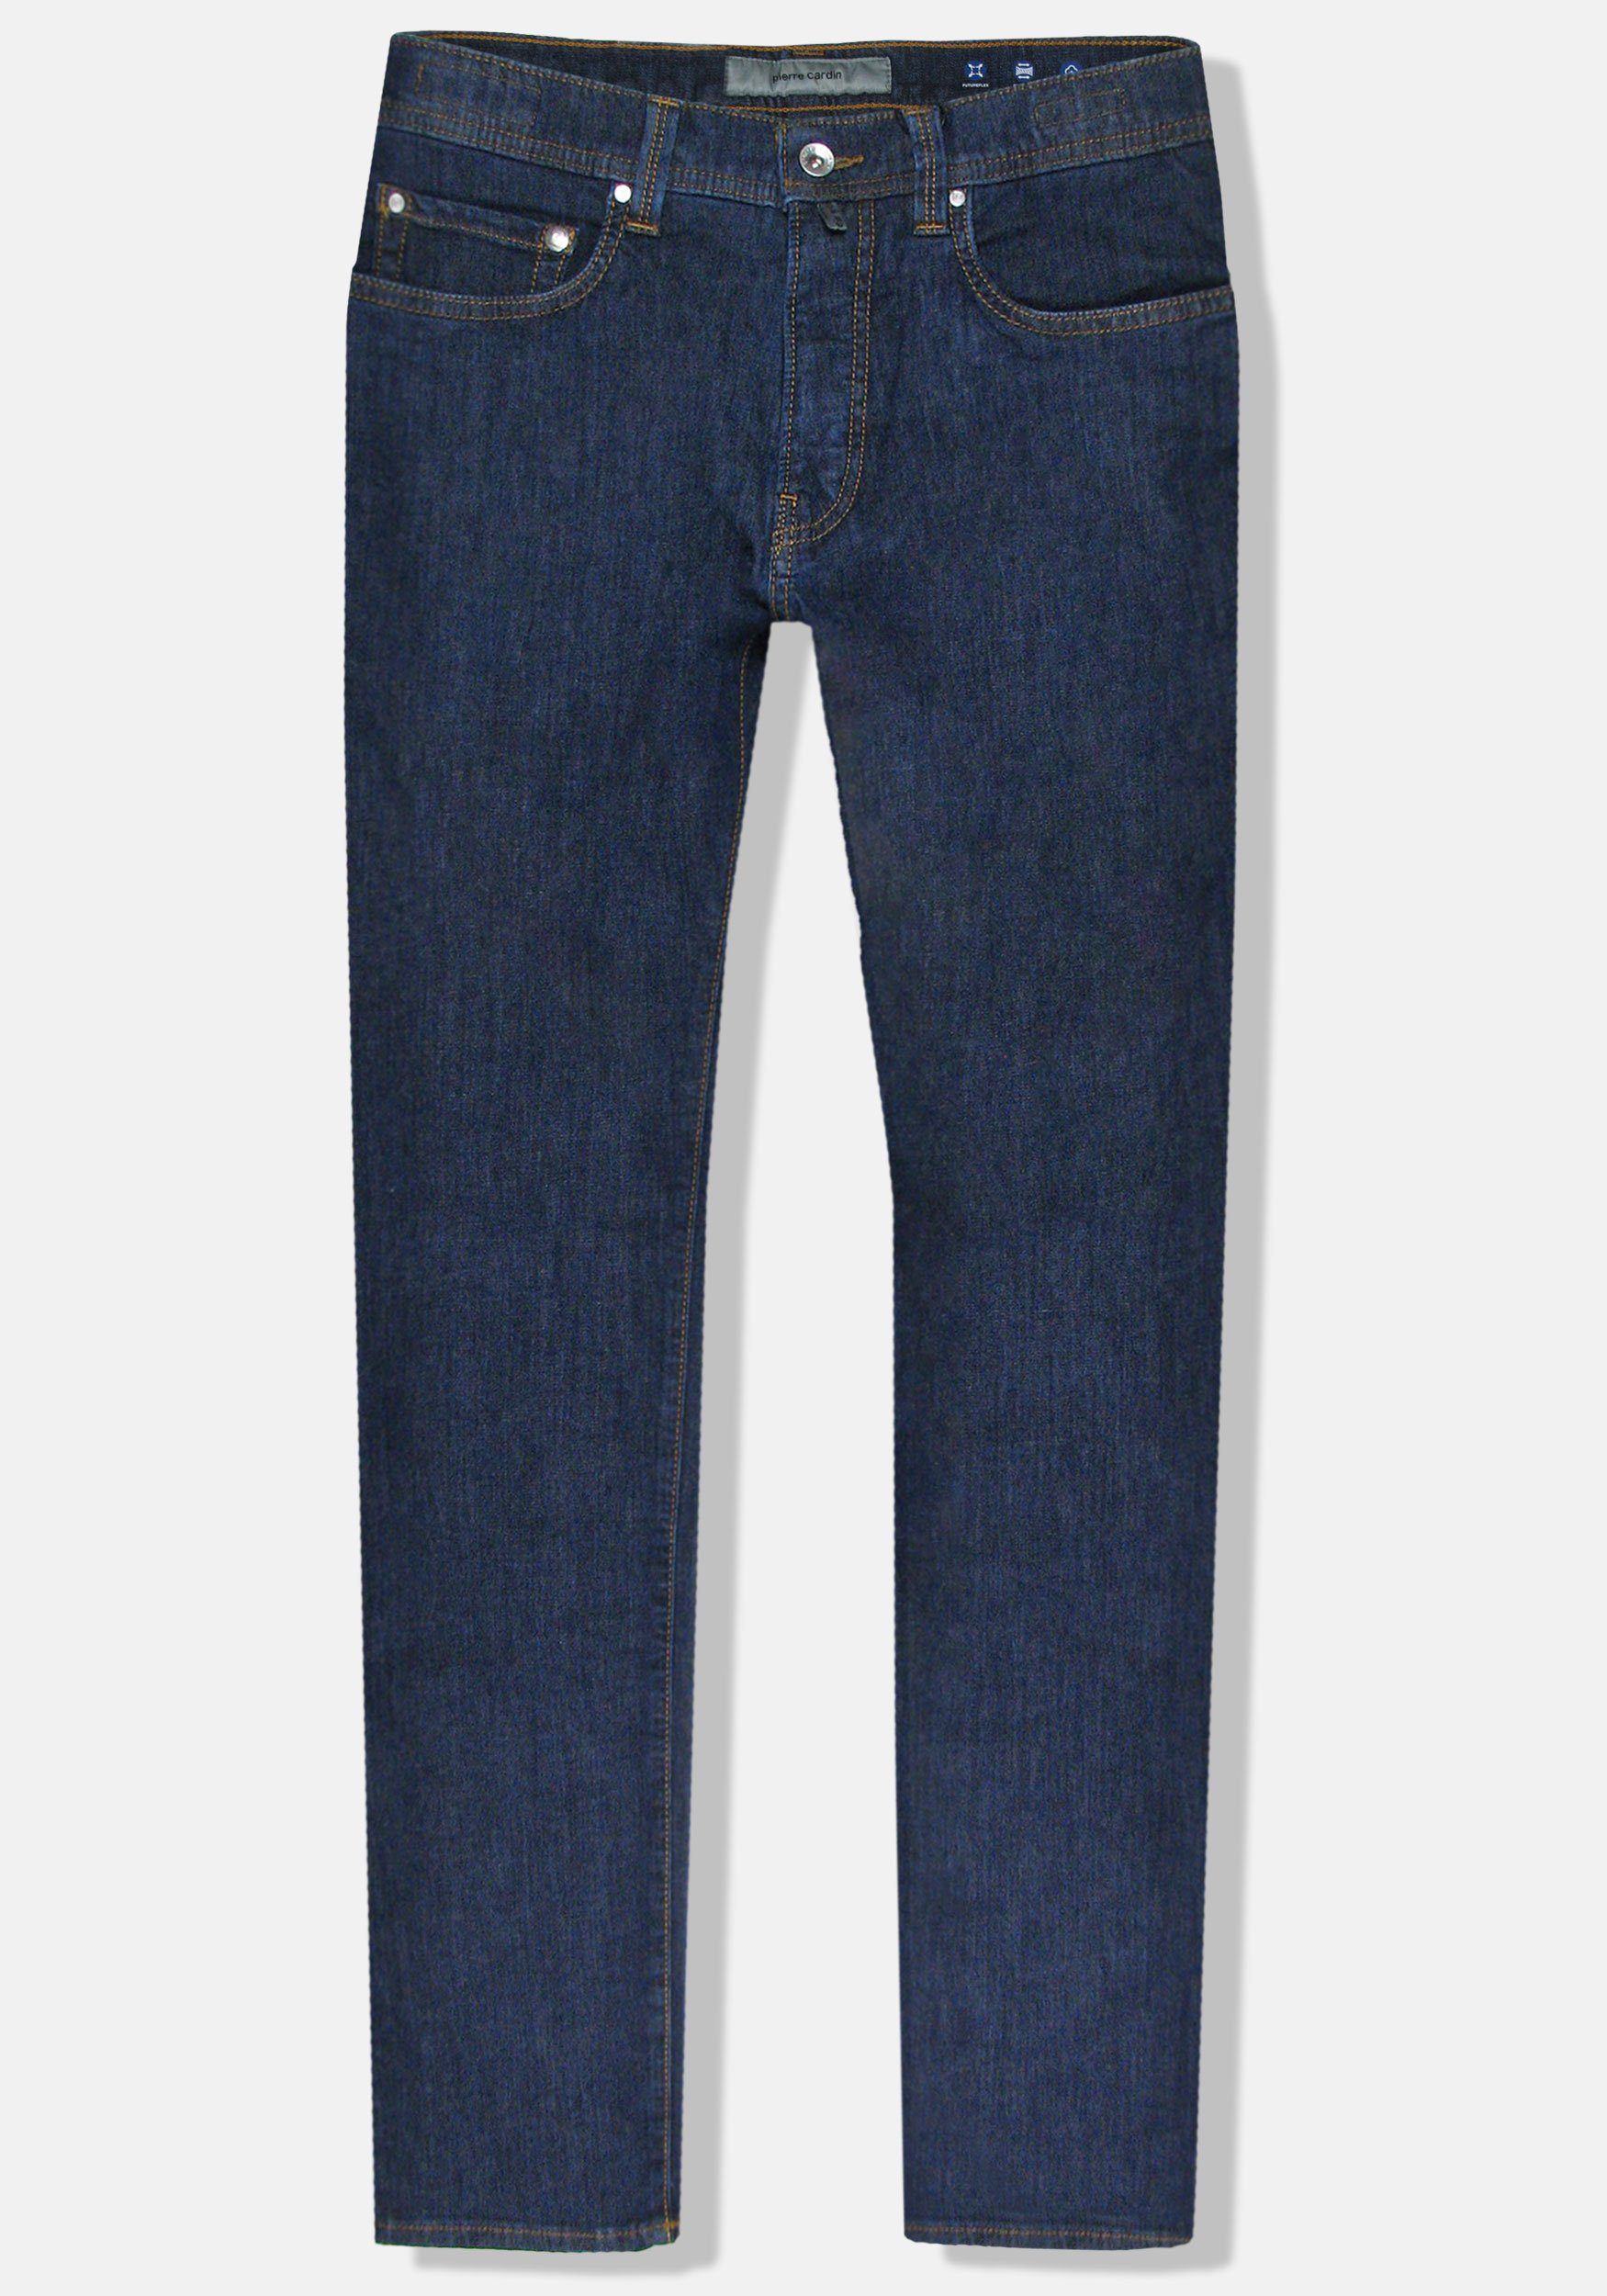 Pierre Cardin 5-Pocket-Jeans Lyon Tapered Futureflex Stretch Denim Dark Blue Rinsed